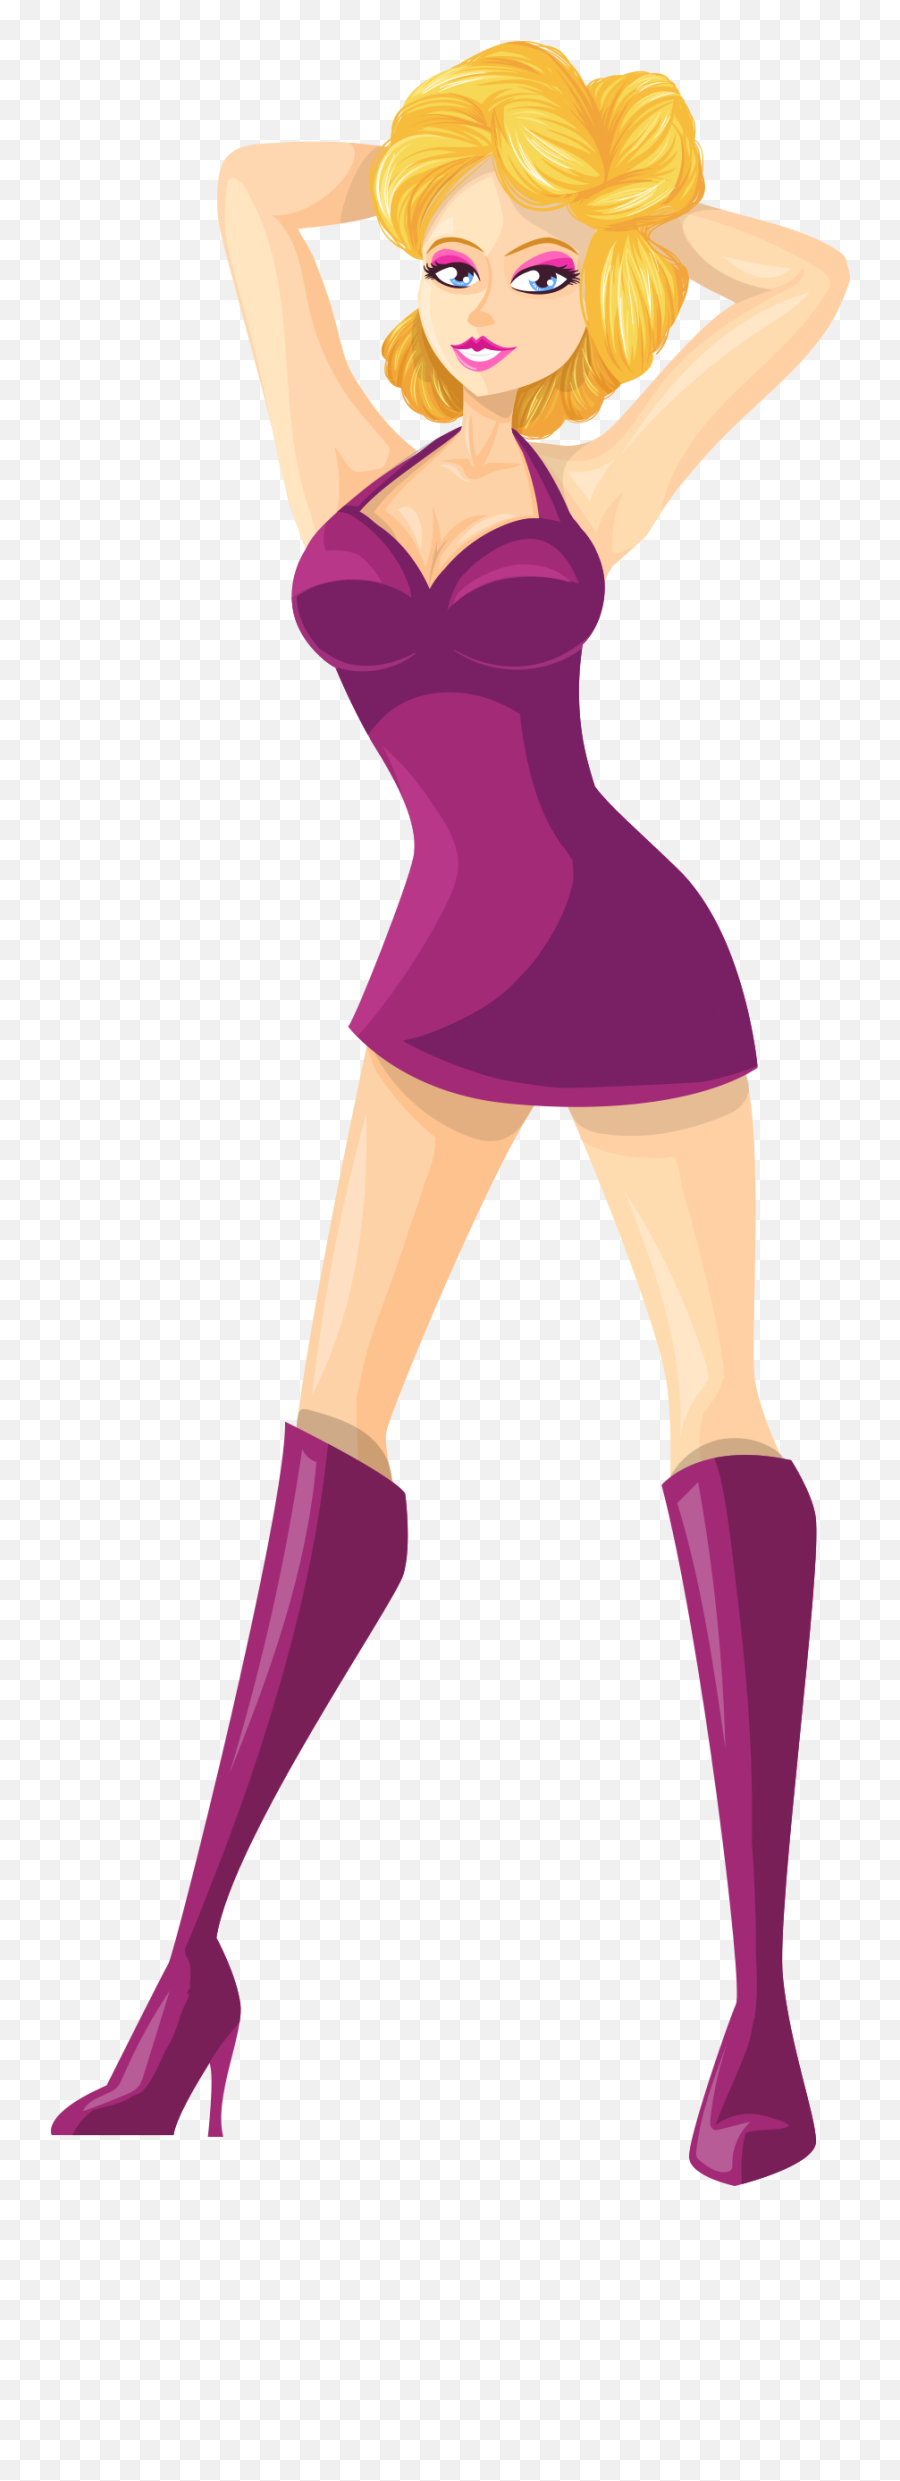 Skin Clipart Light Skin Skin Light - Woman In Short Skirt Cartoon Emoji,Blonde Shrug Emoji